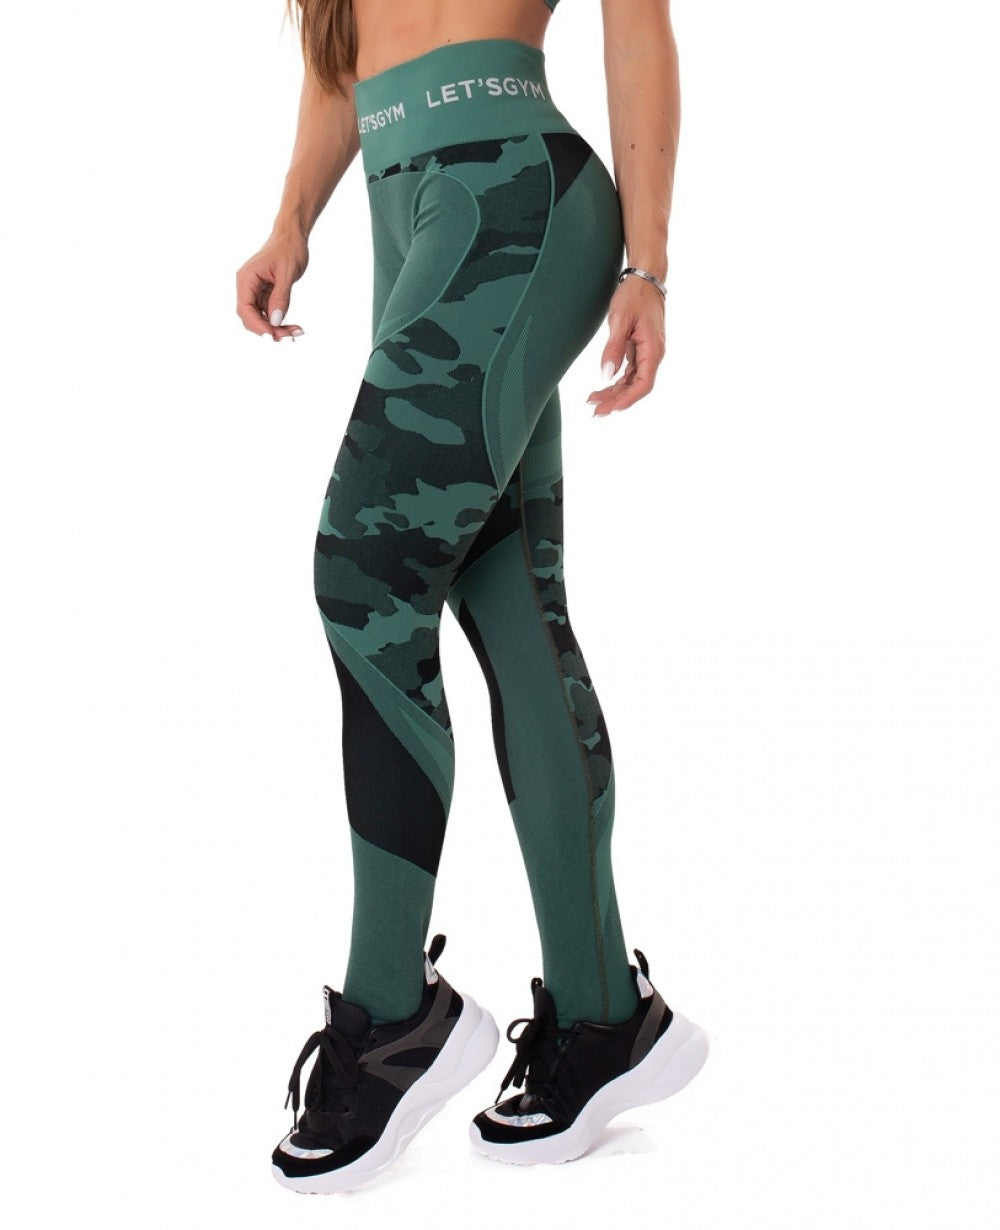 CUHAKCI Camouflage Printed Women Leggings Fitness Leggins Gym High Elastic  Skinny Army Green Jegging Sport Pencil Pants New - AliExpress